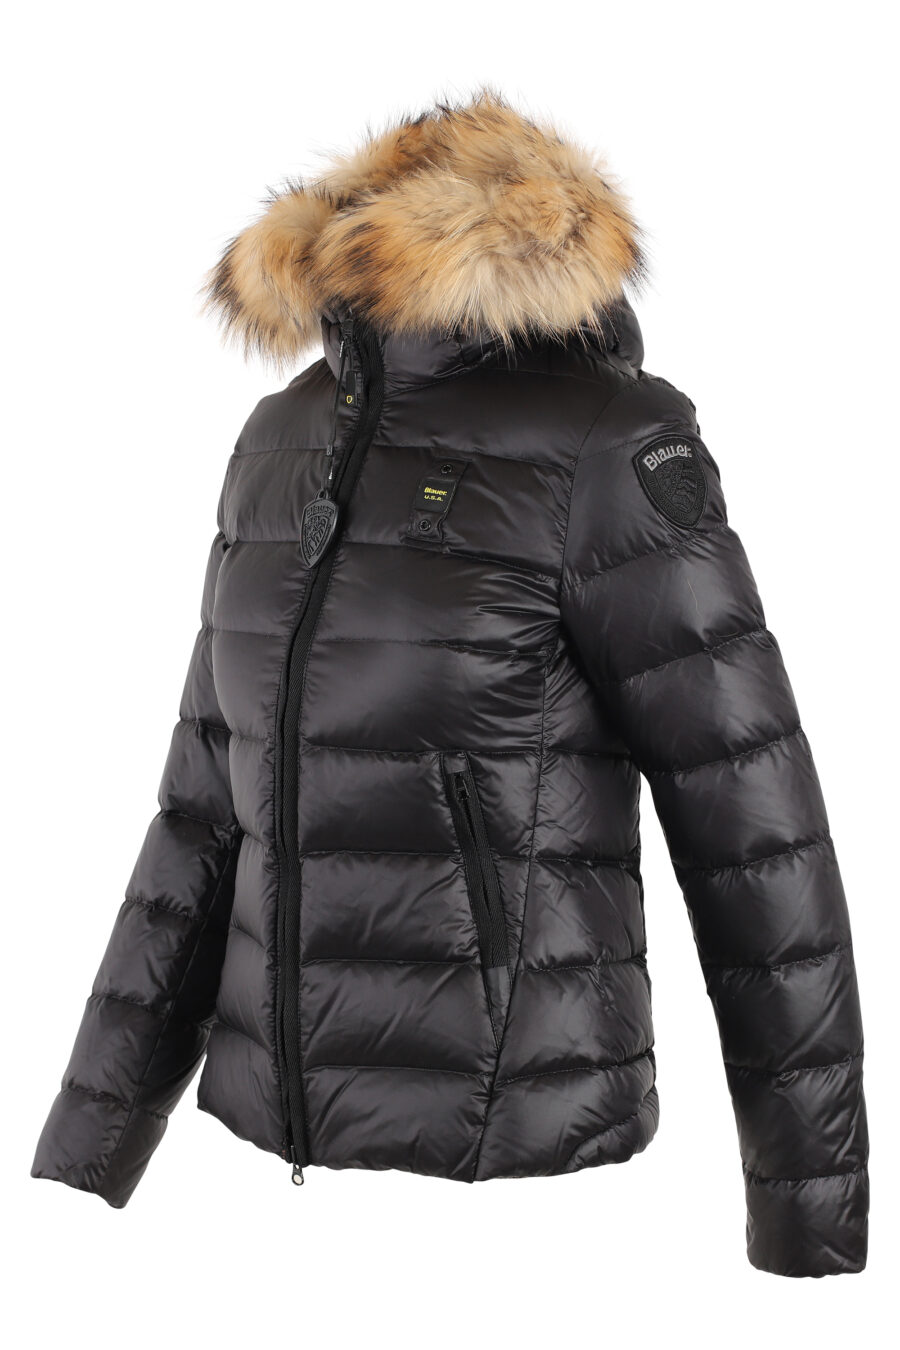 Black fur hooded jacket with reddish-brown interior - IMG 4930